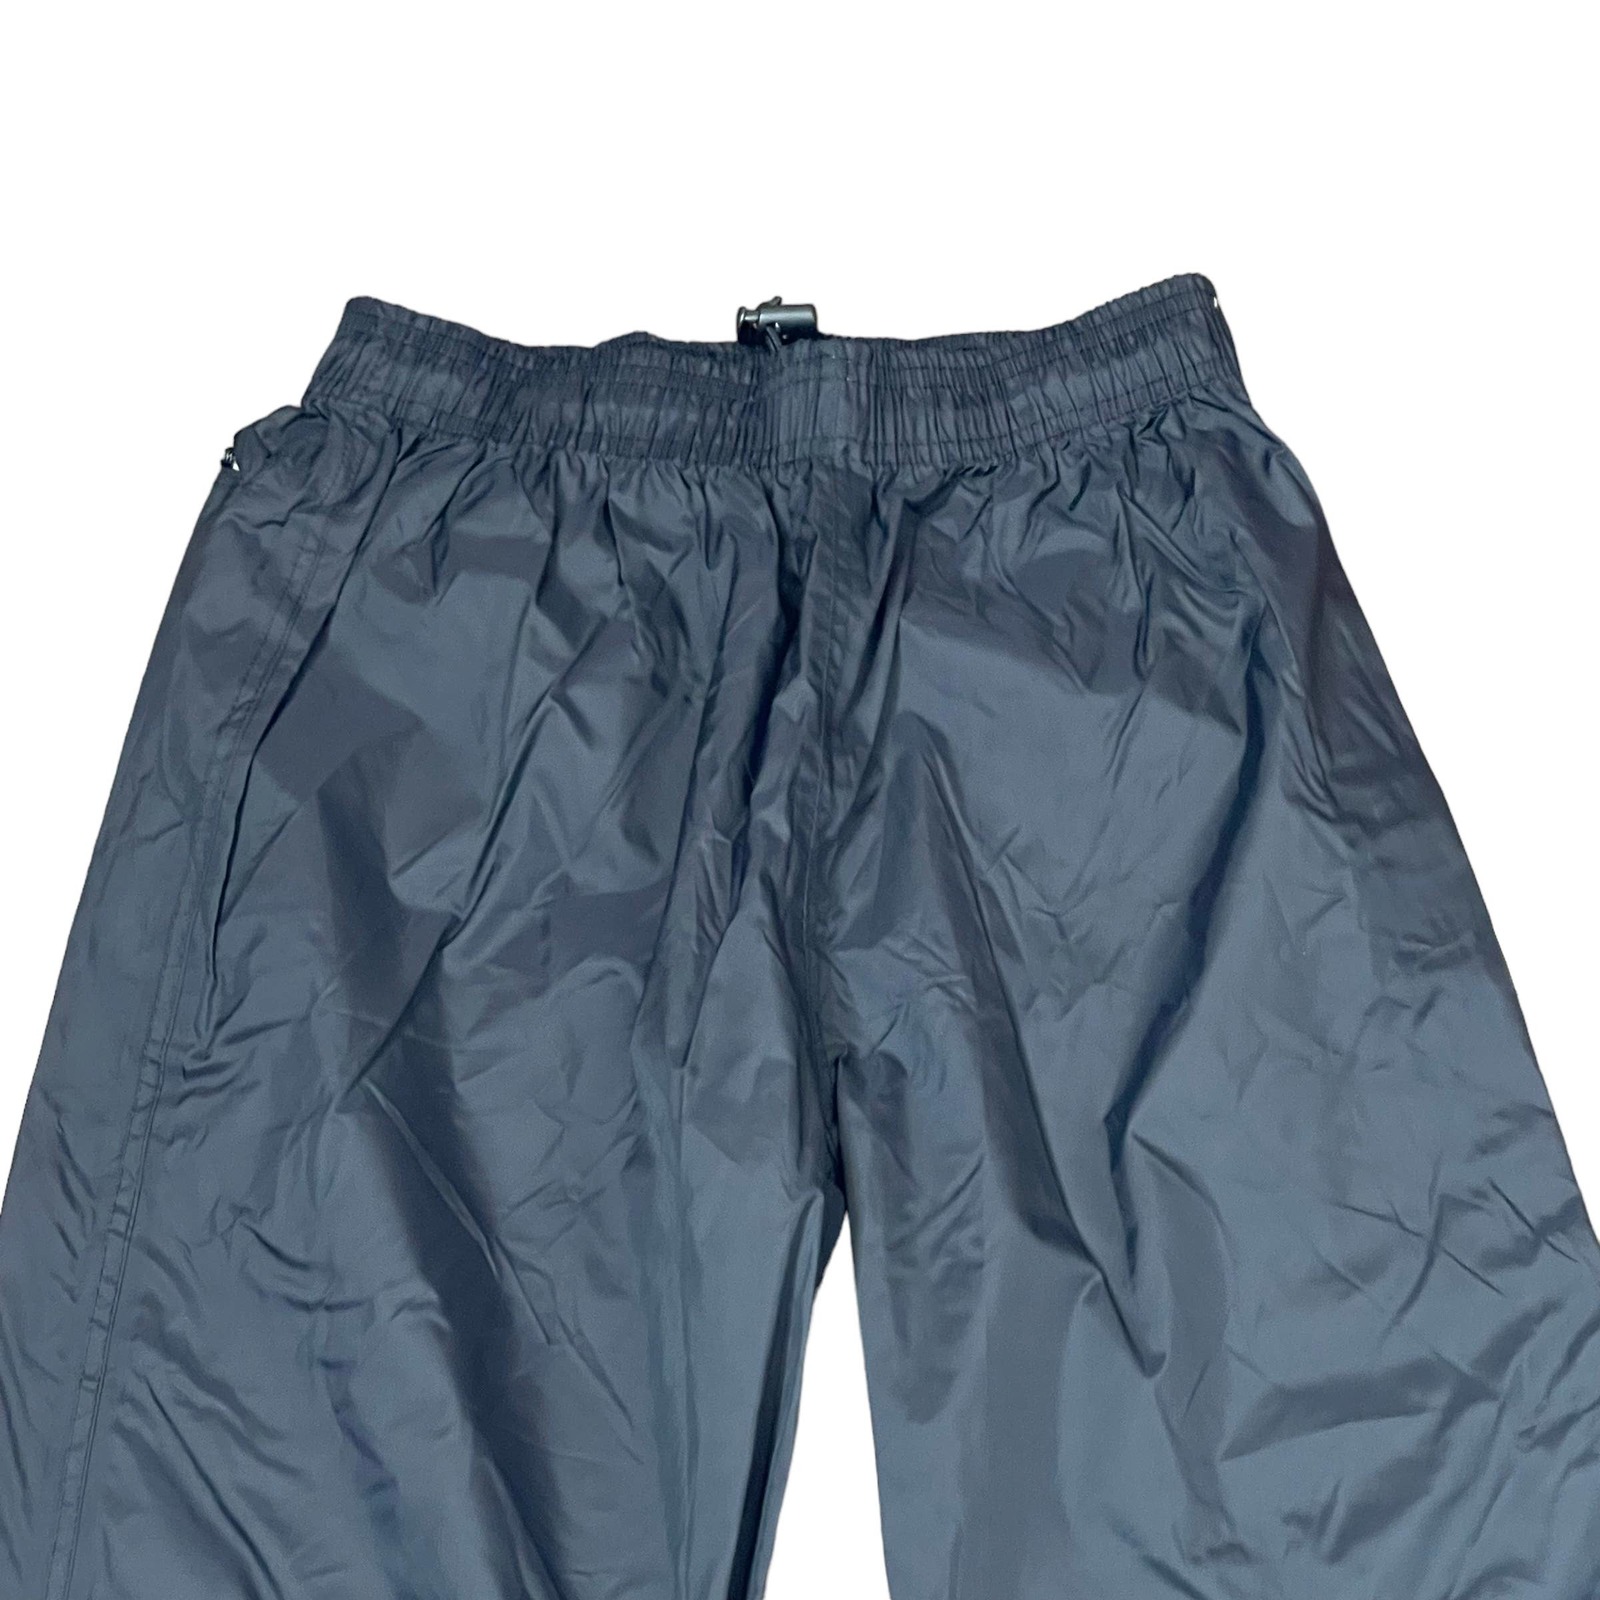 Magellan Outdoors Pants Size Small Black Pull On 100% Nylon Fishing 24x29